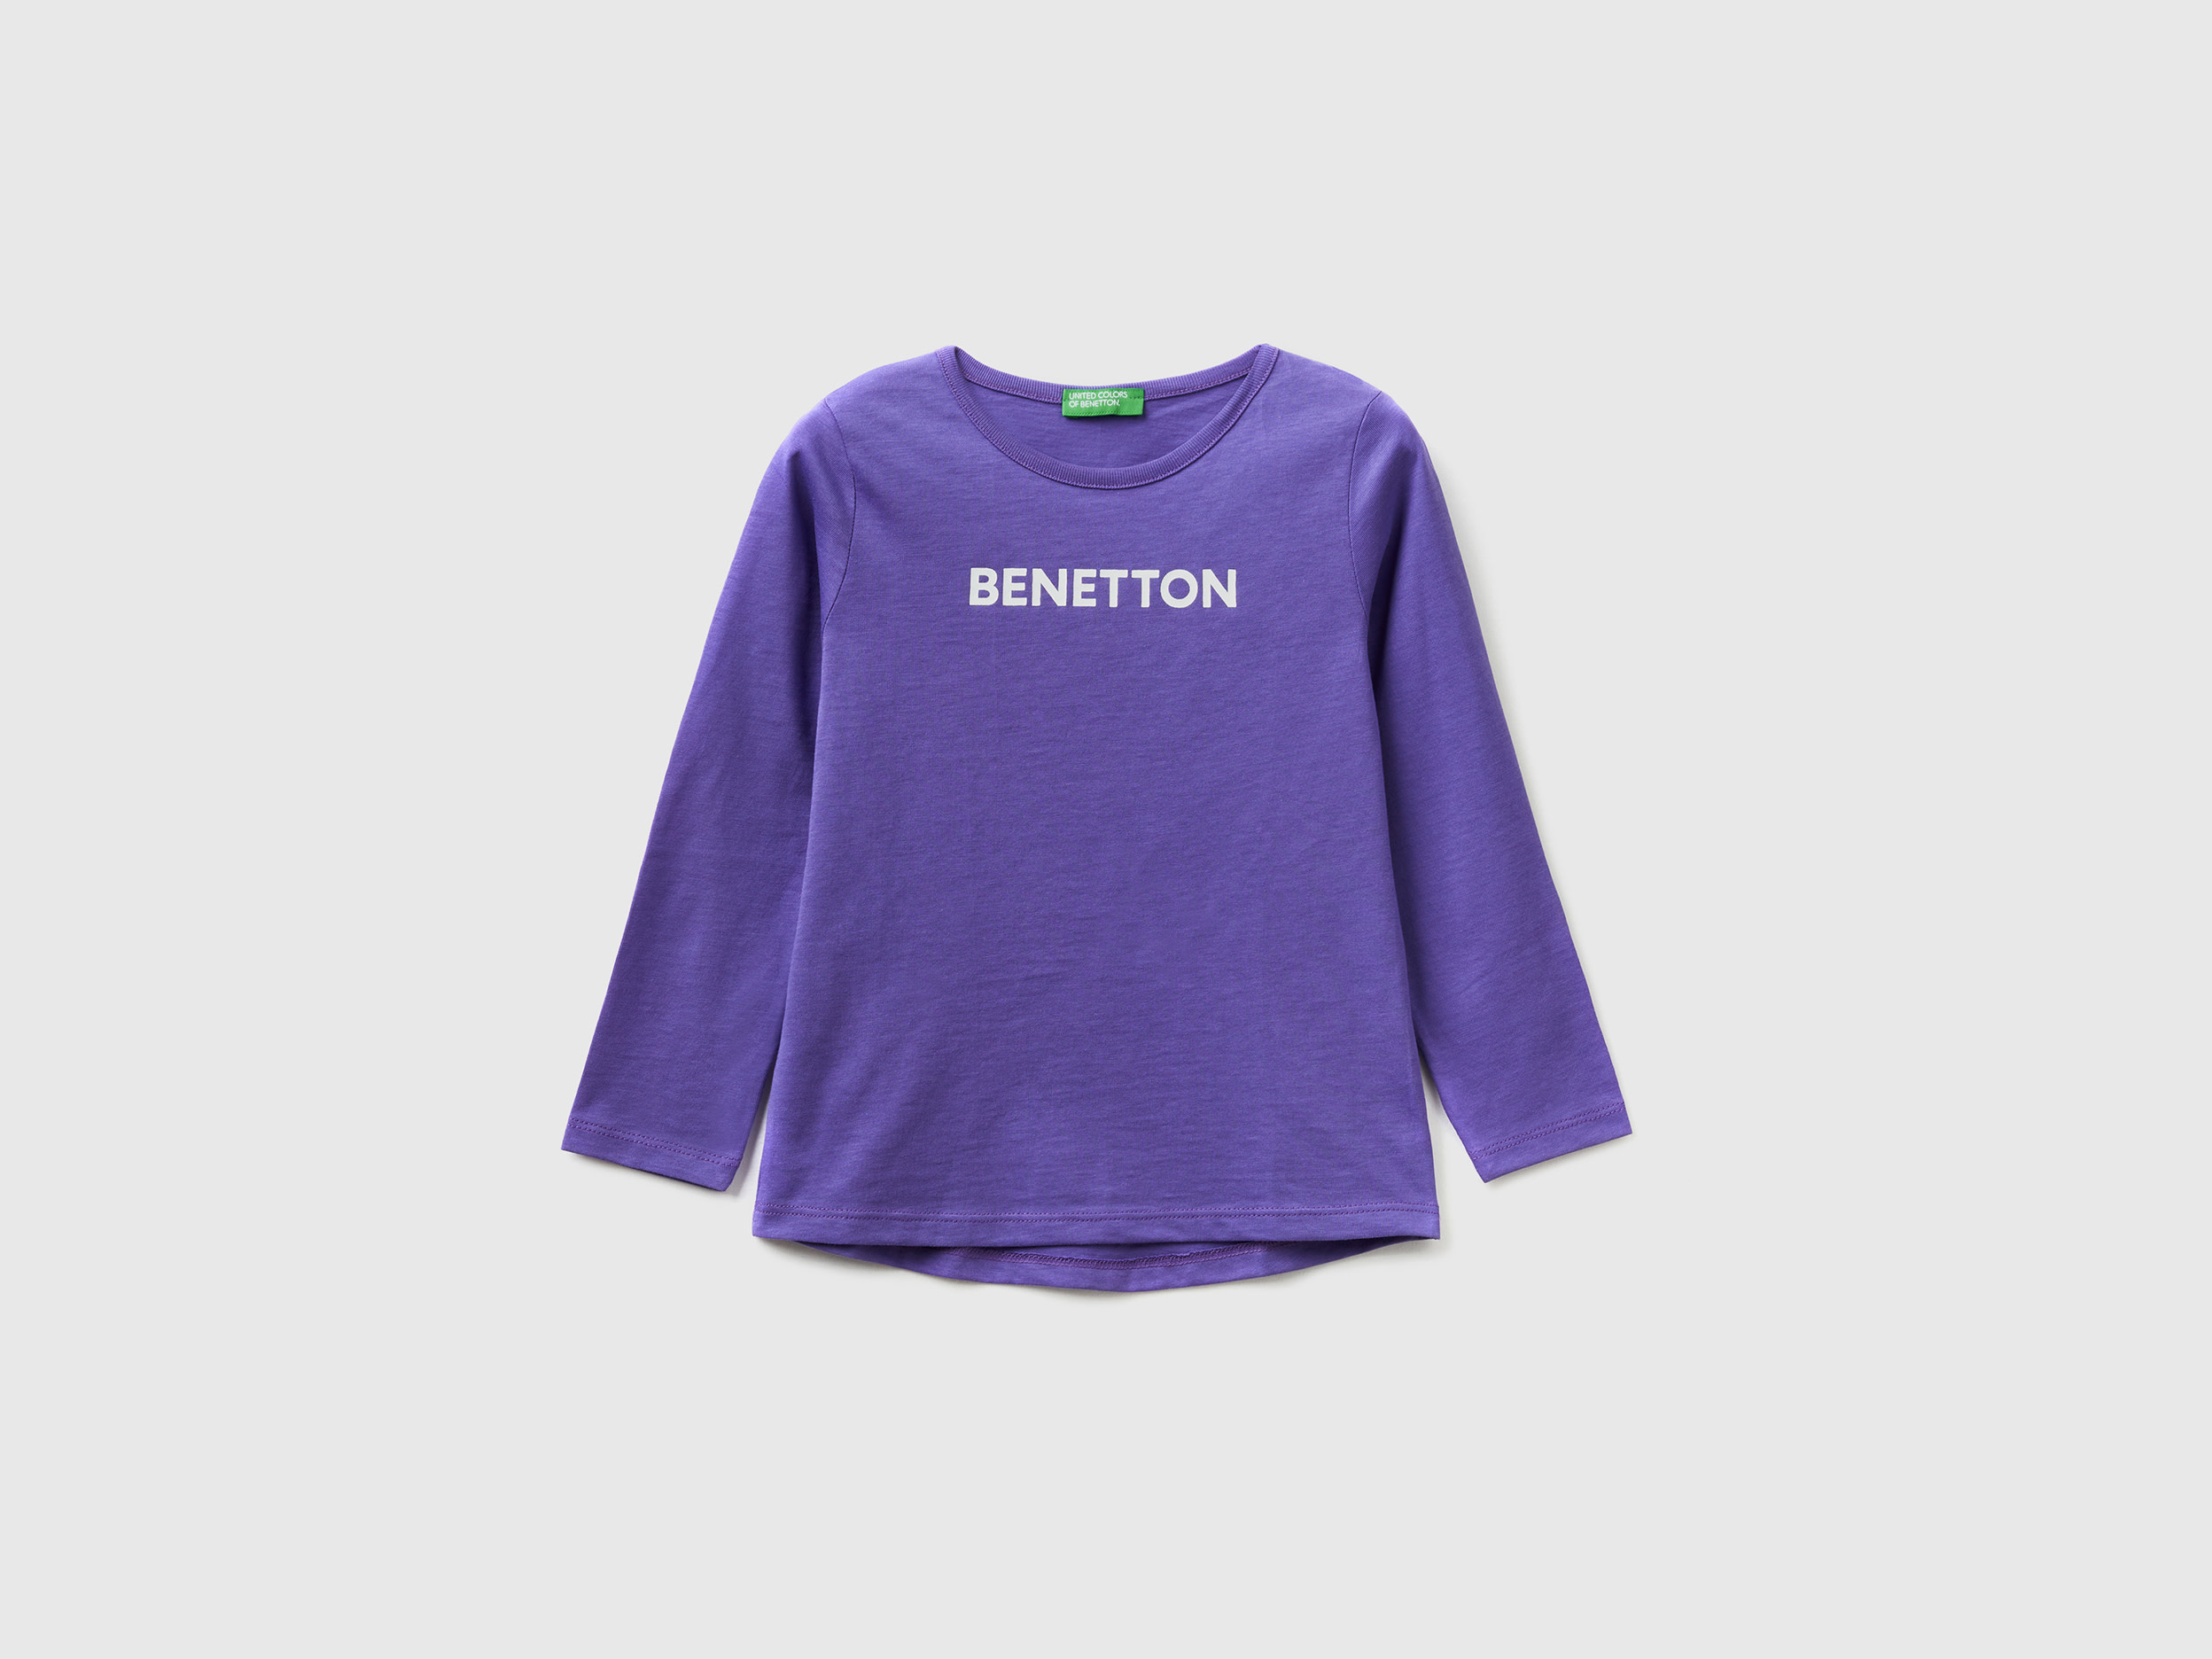 Benetton, 100% Cotton T-shirt With Logo, size 4-5, Violet, Kids